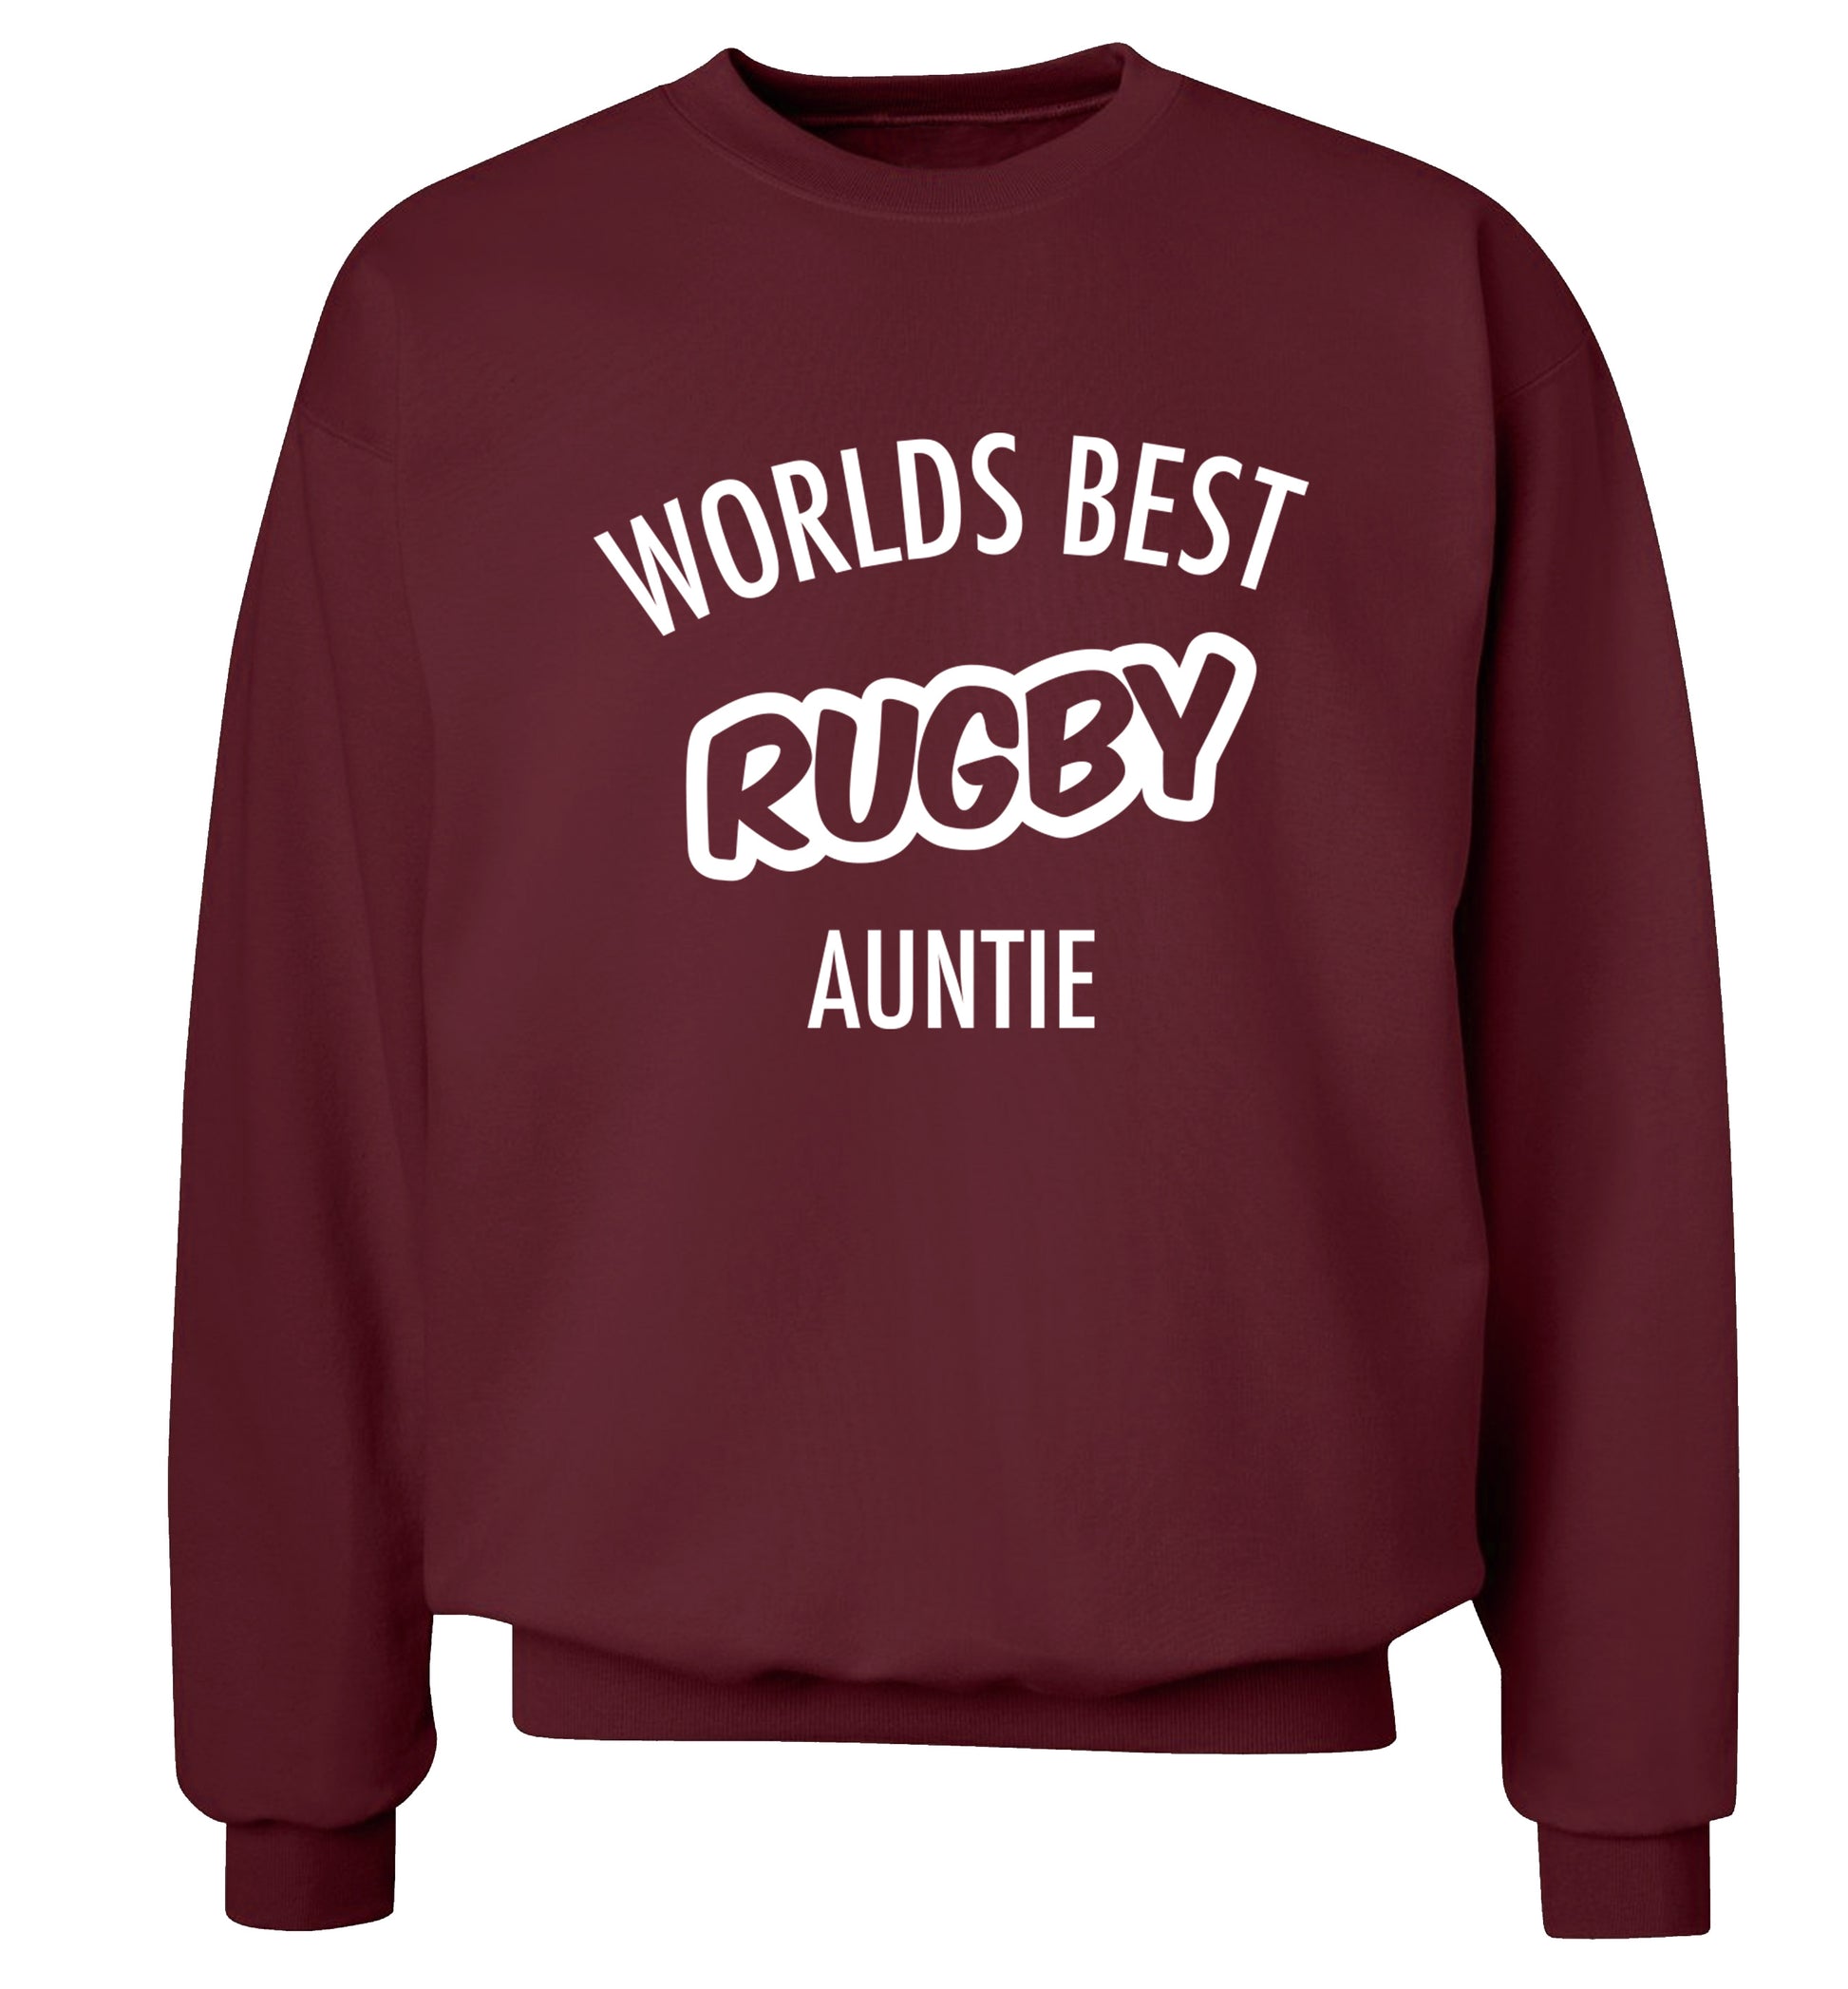 Worlds best rugby auntie Adult's unisex maroon Sweater 2XL